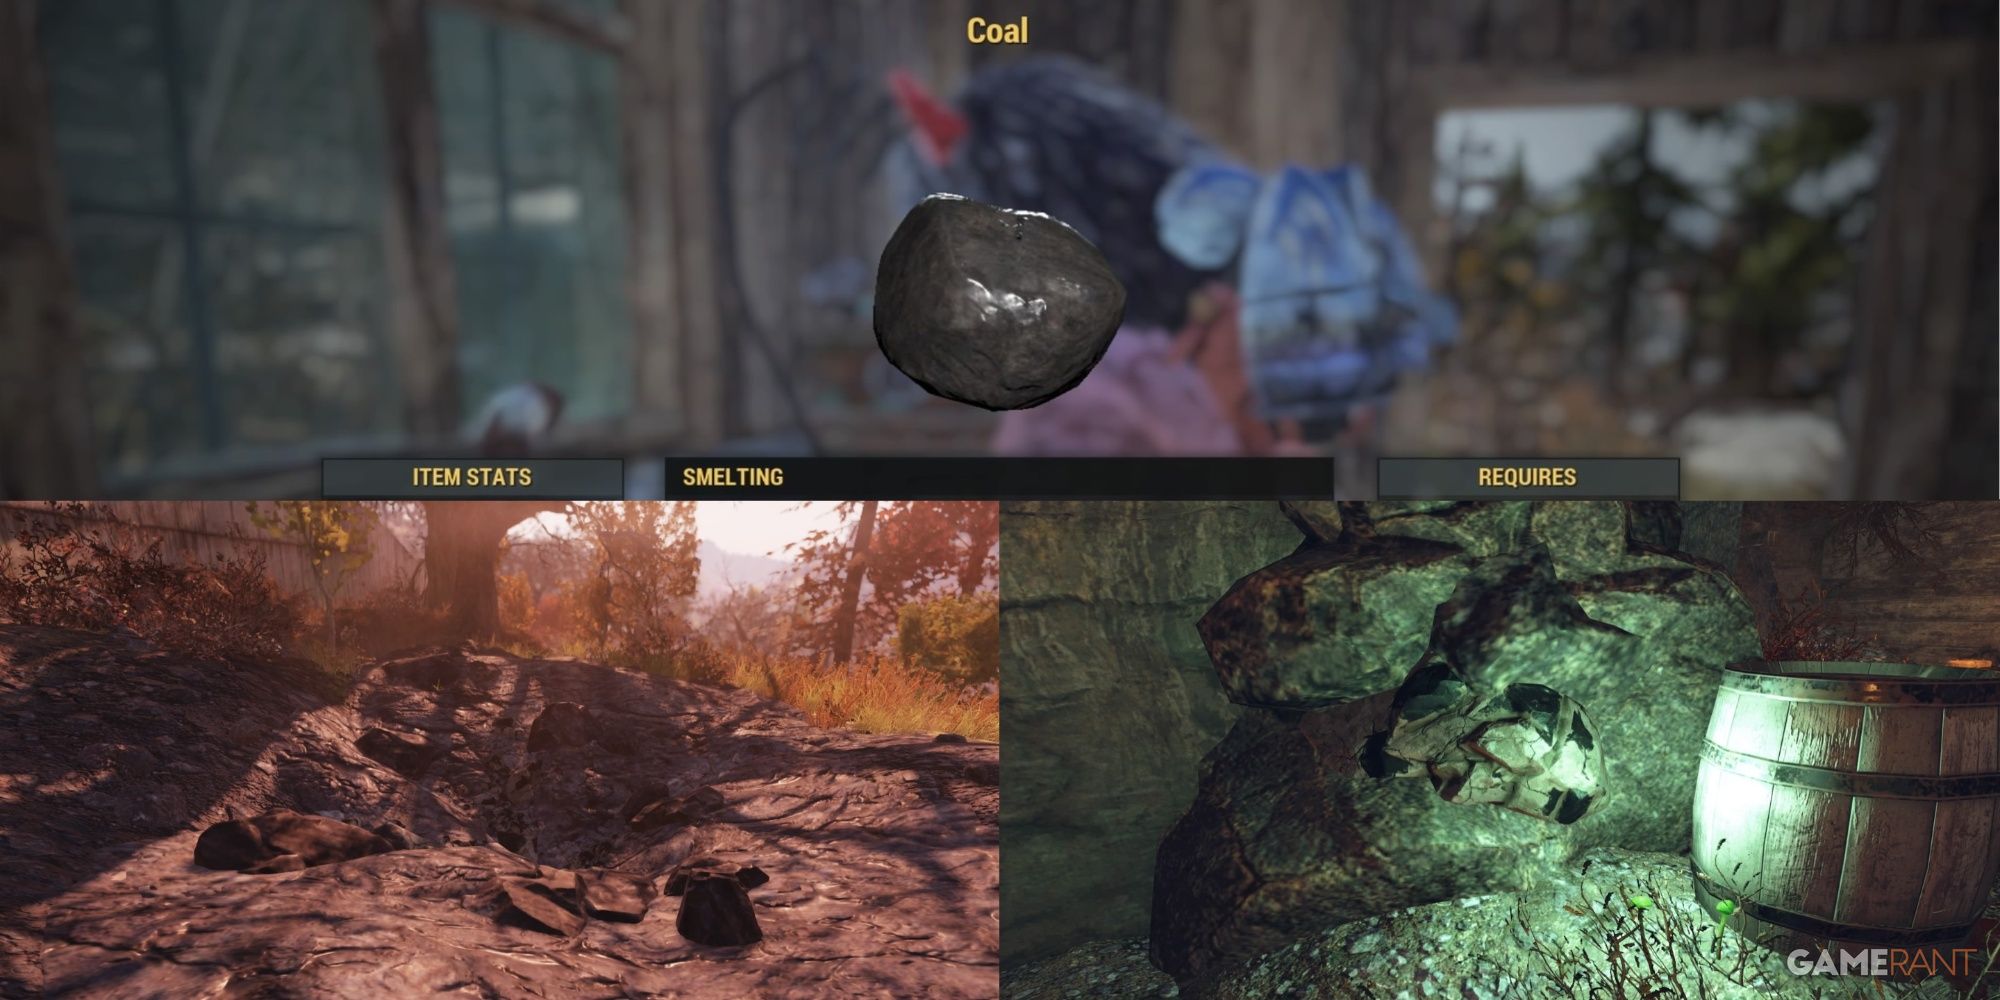 Farming Coal in Fallout 76